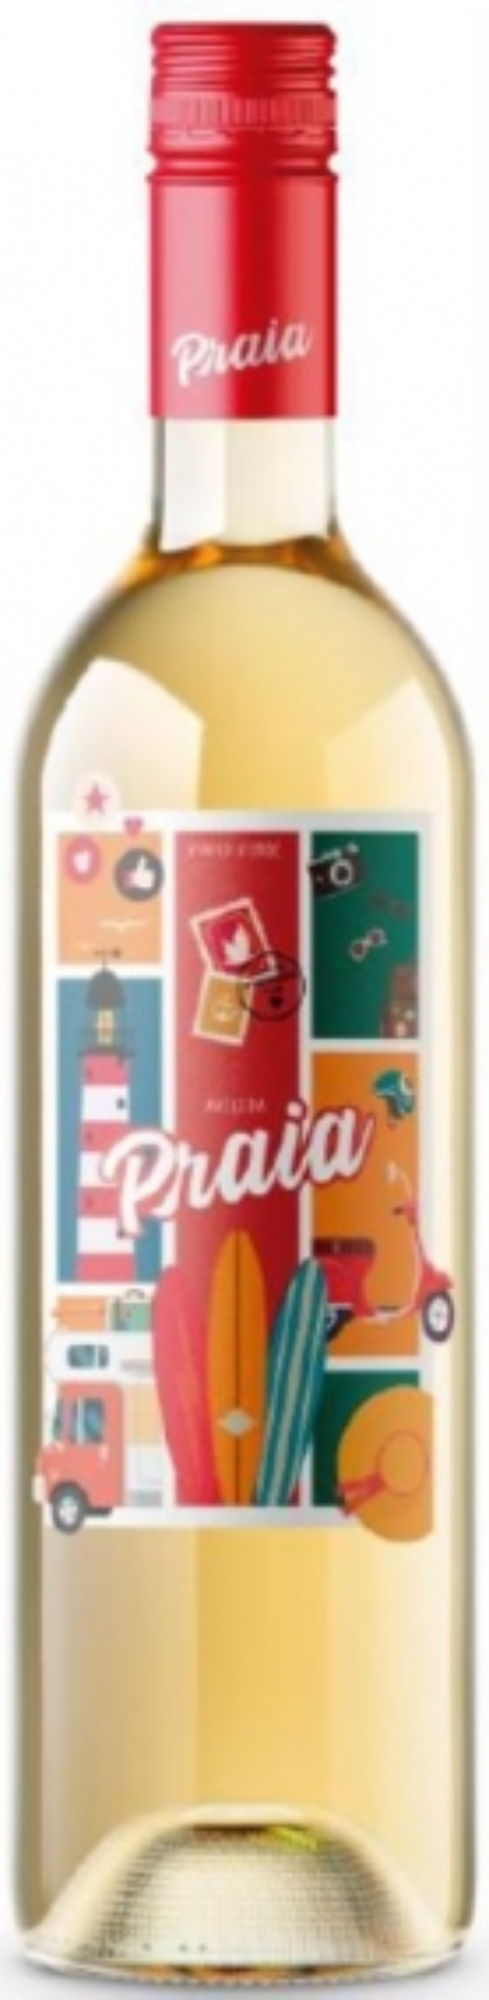 Praia (Aveleda) Vinho Verde NV (Email Sale, Arrives 5/2)